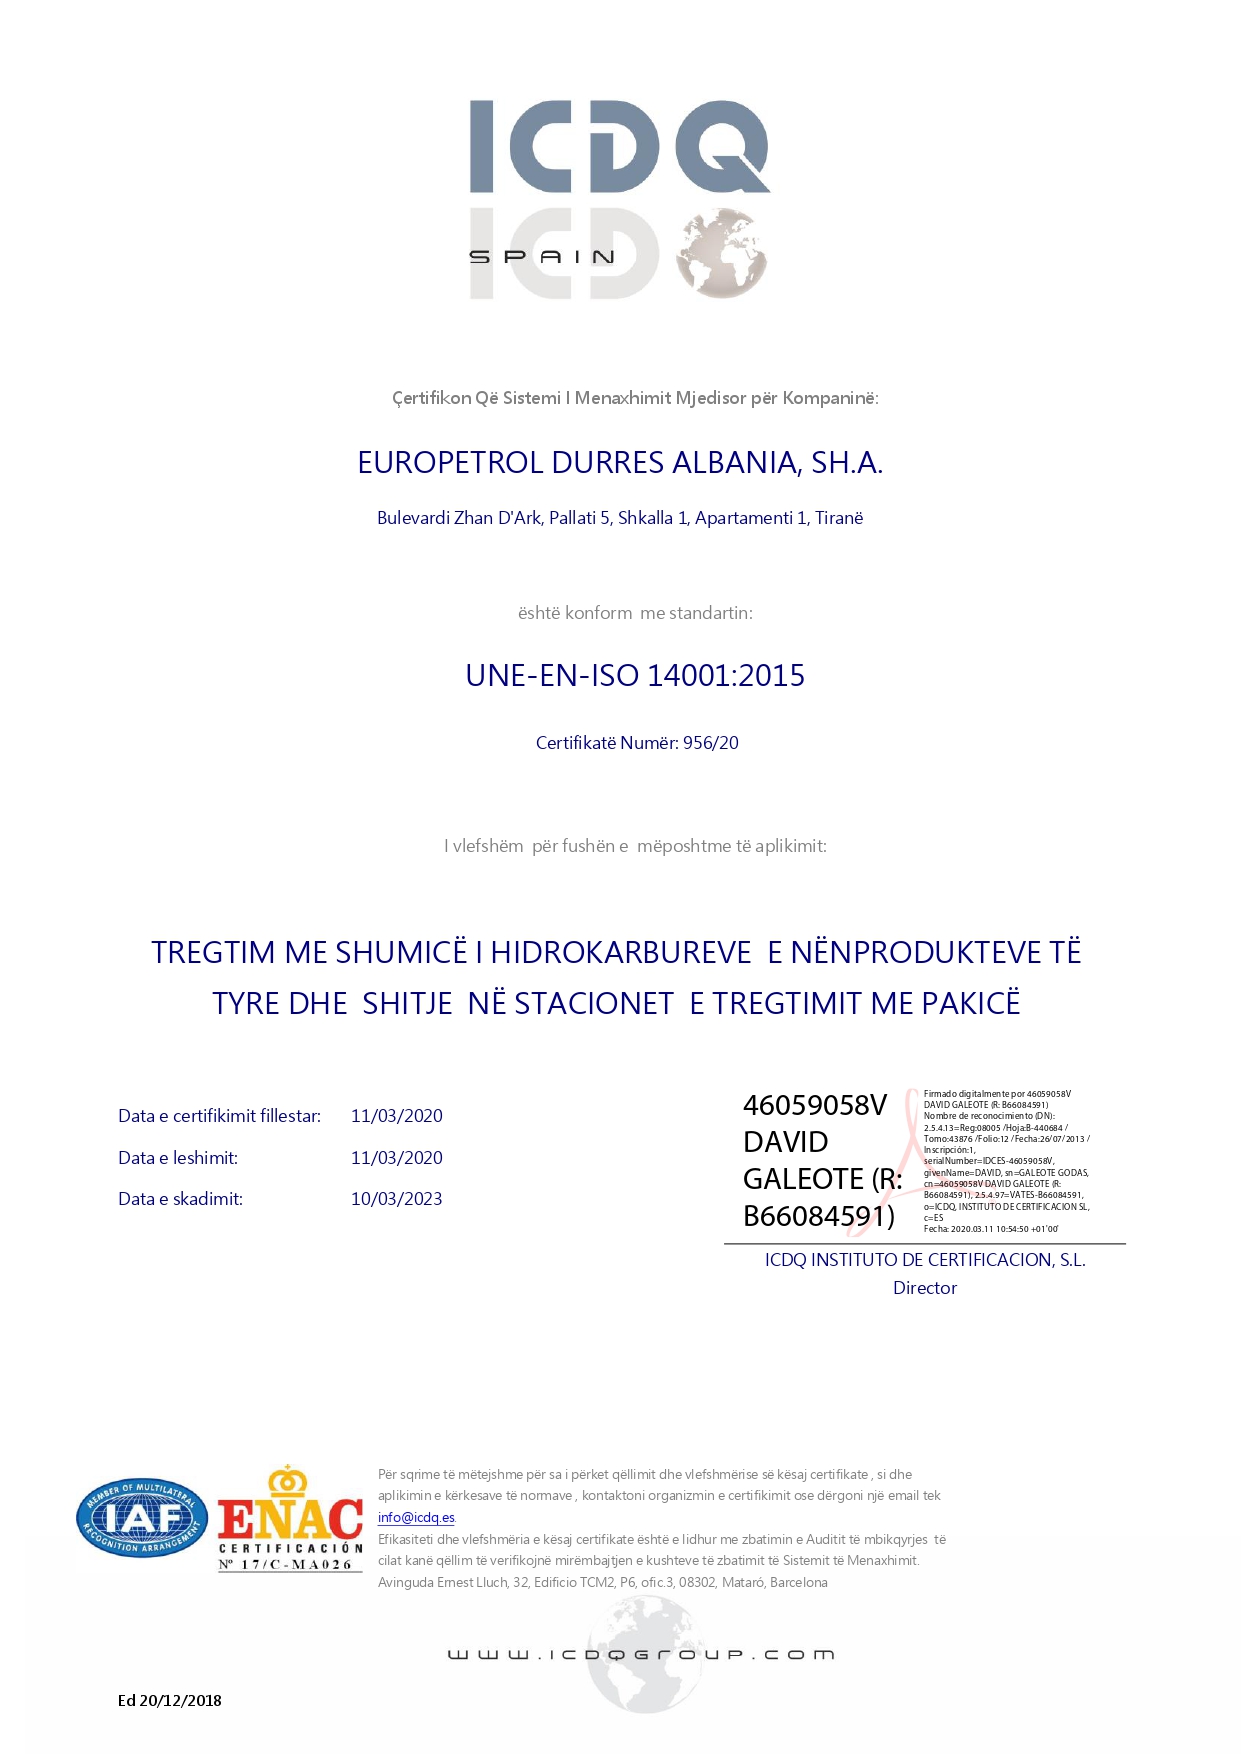 UNE-EN-ISO 14001:2015